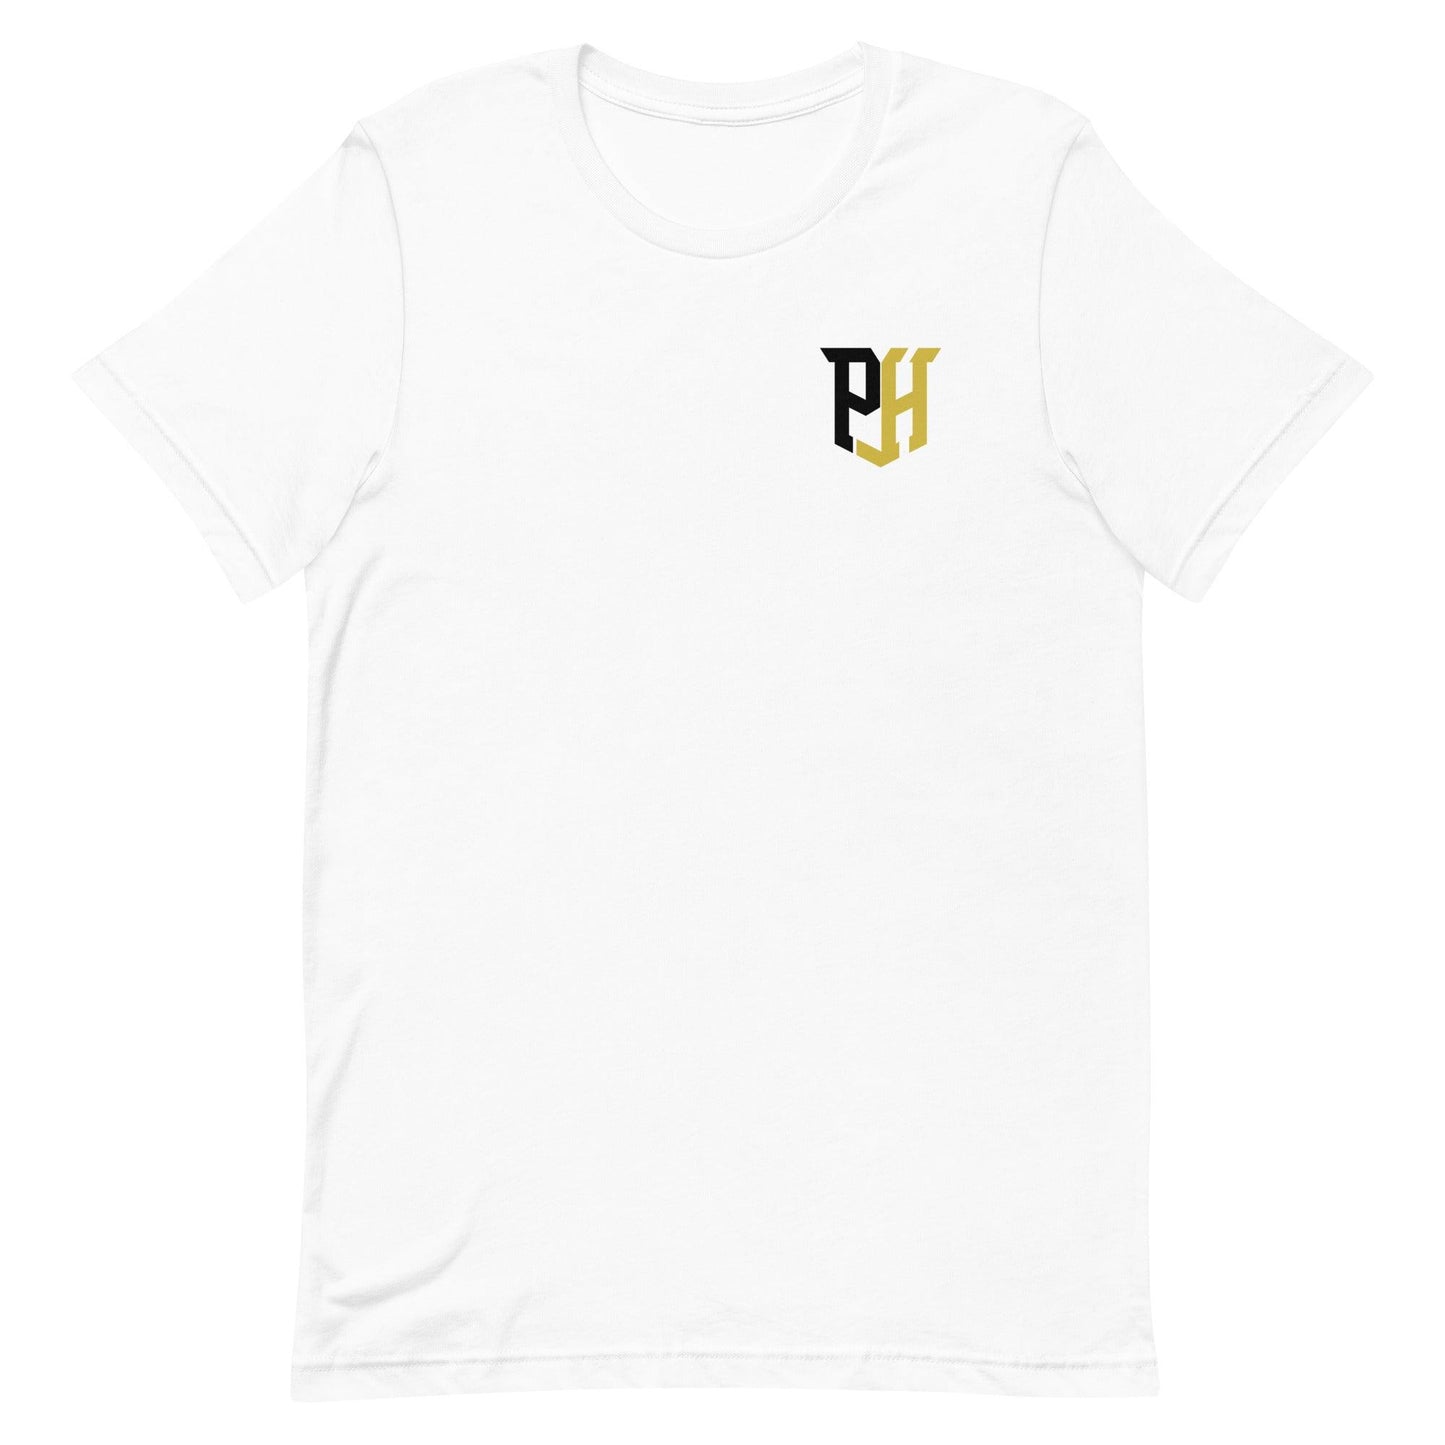 Prentiss Hubb “PH” t-shirt - Fan Arch